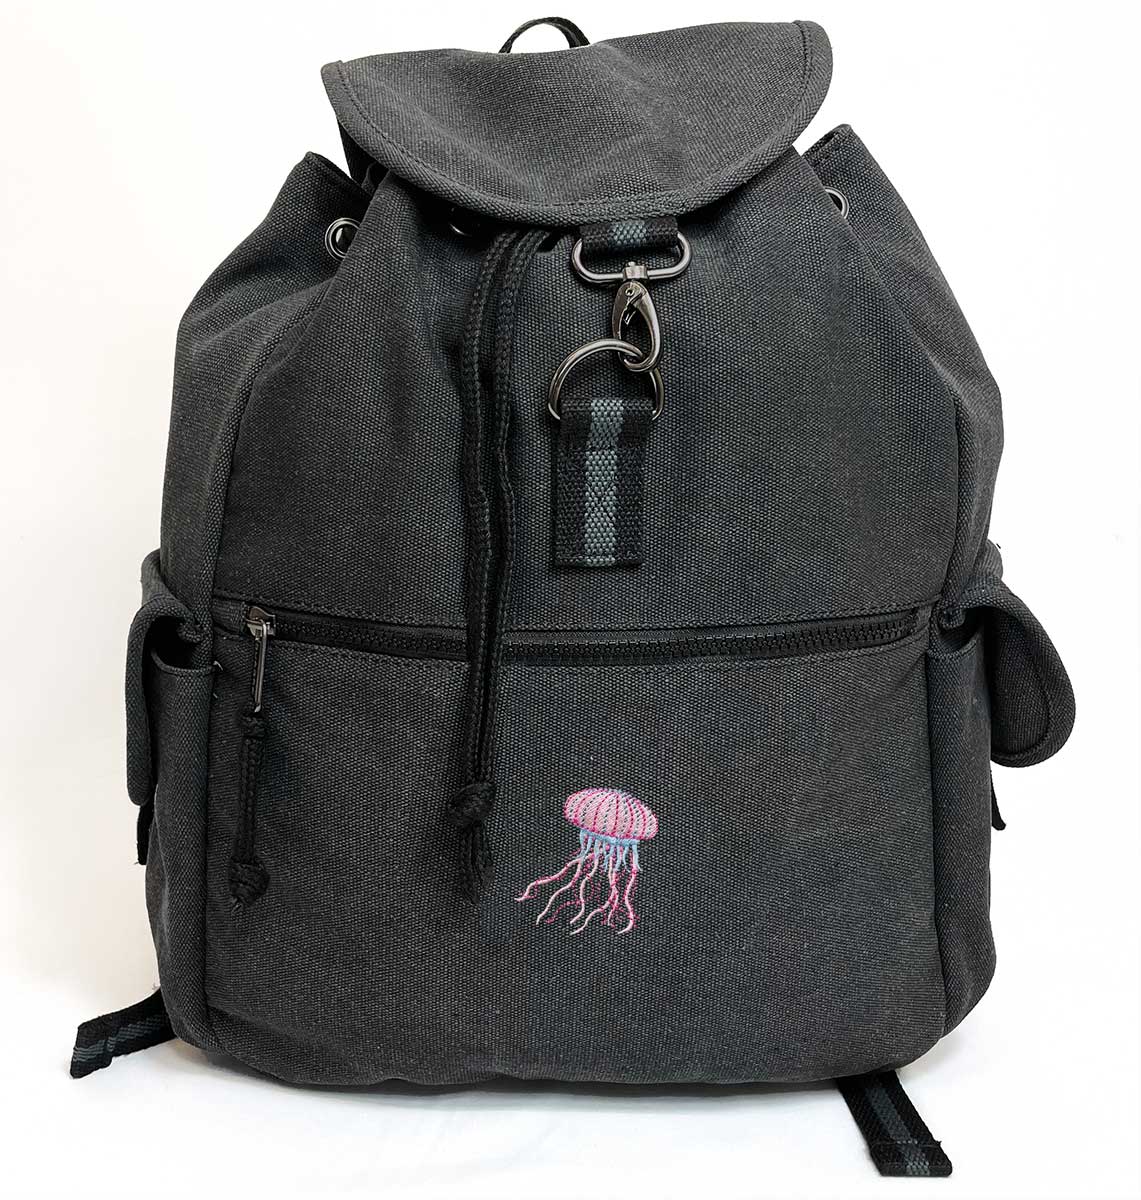 Jellyfish Vintage Canvas Backpack - Blue Panda